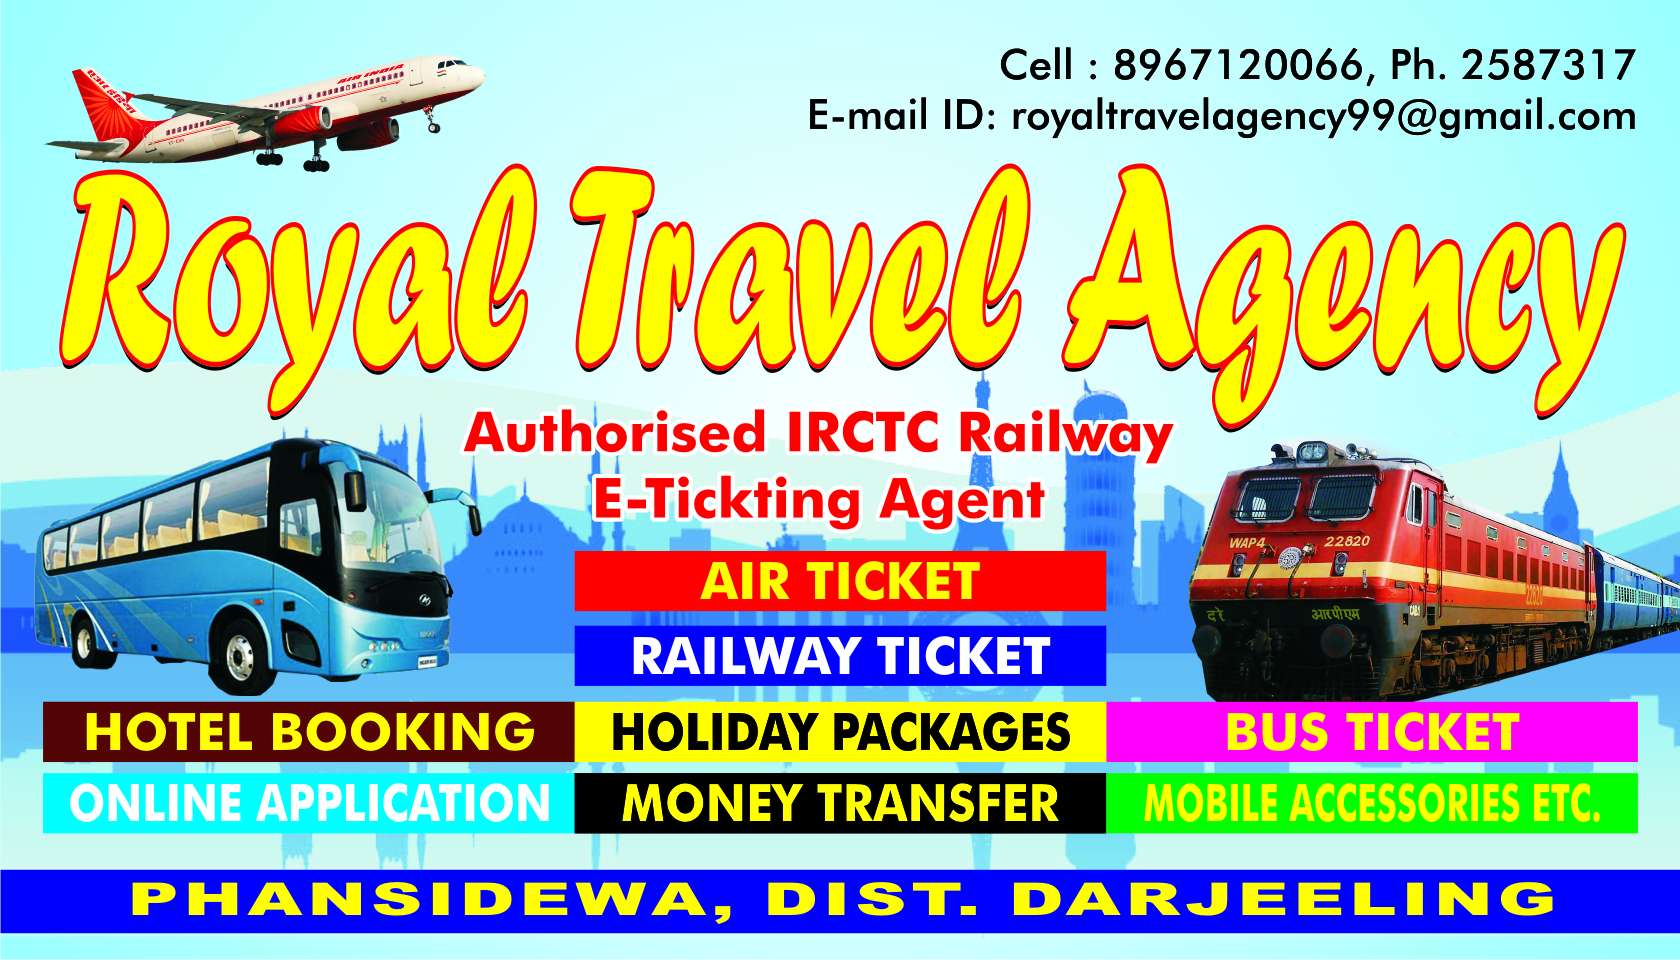 Royal Travel Agency